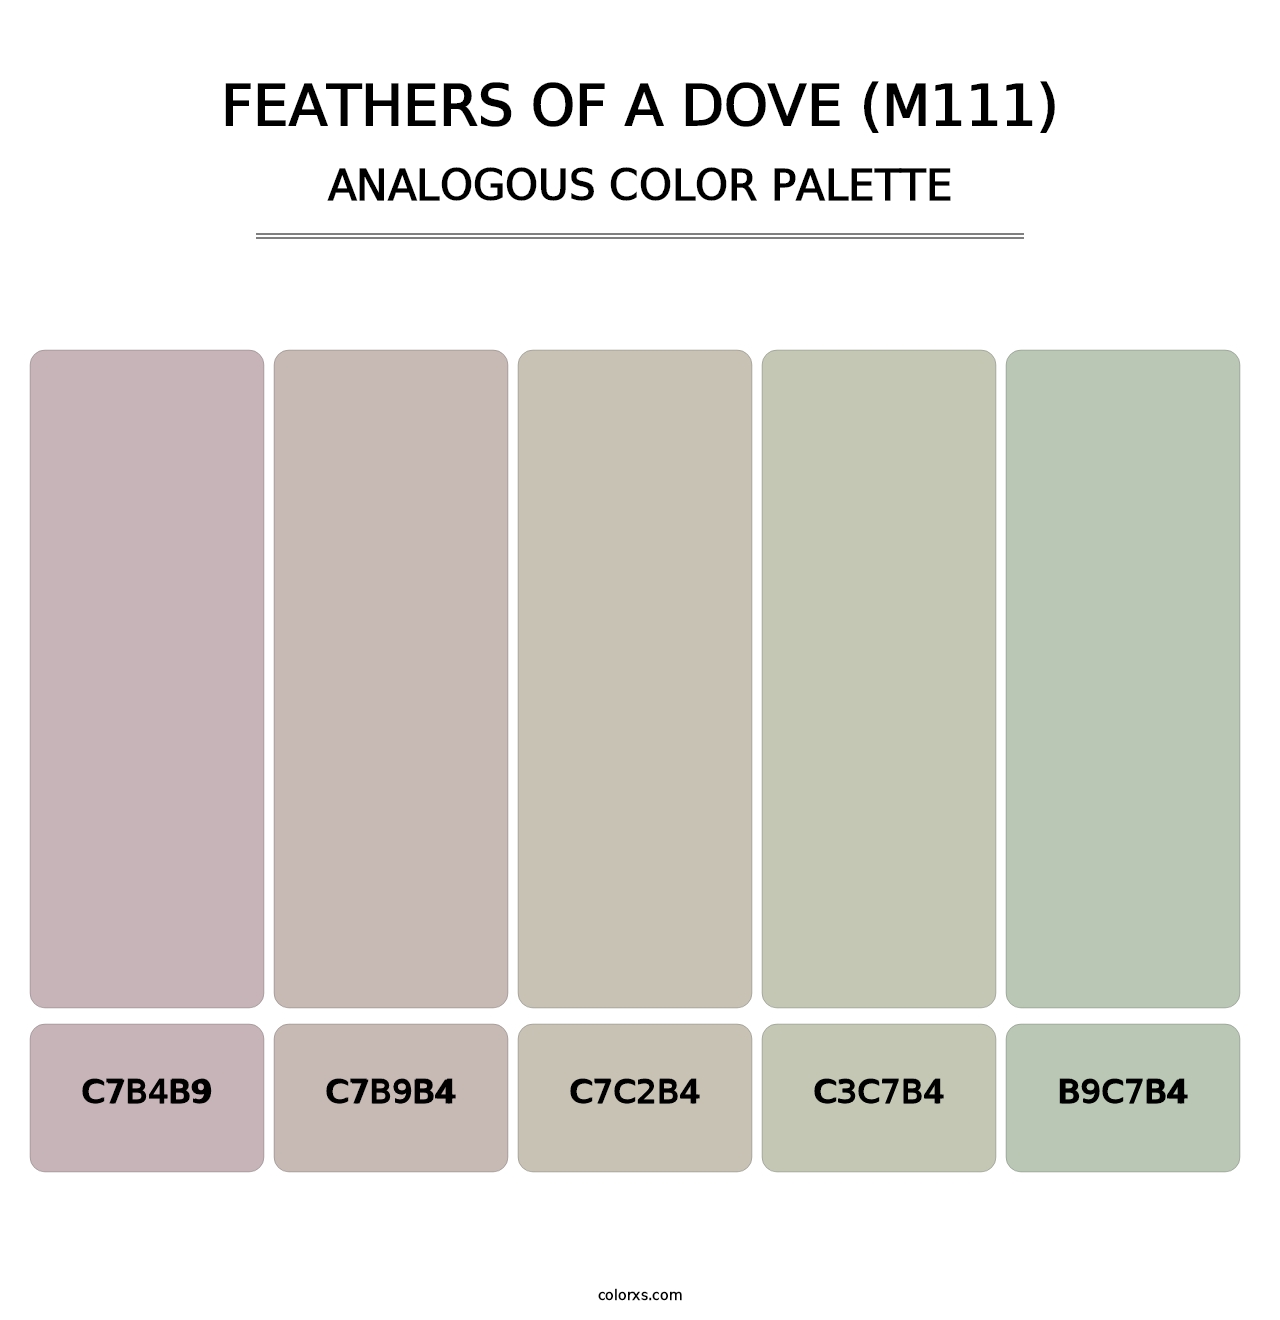 Feathers of a Dove (M111) - Analogous Color Palette